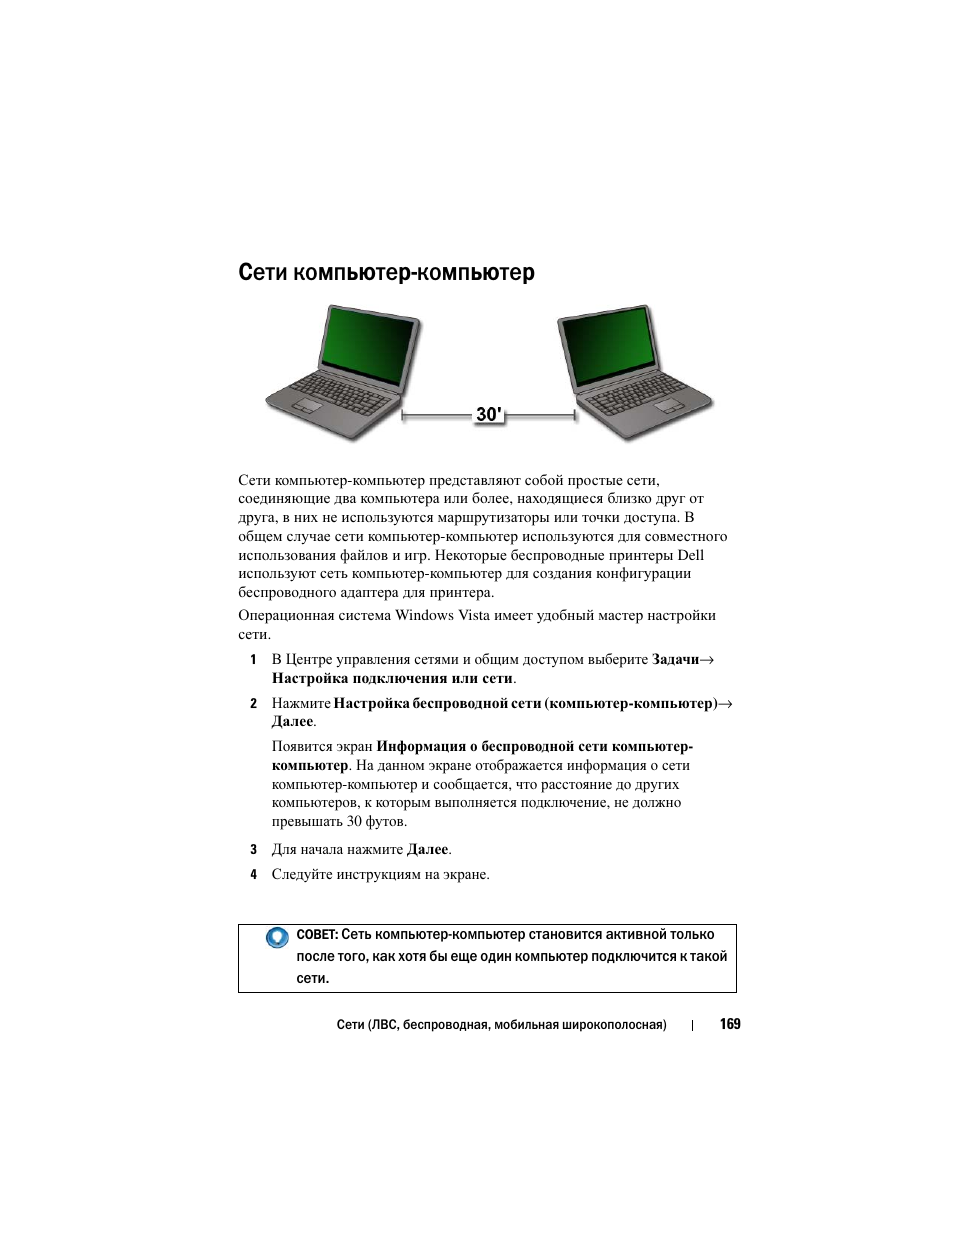 Сети компьютеркомпьютер, Сети компьютер компьютер | Инструкция по эксплуатации Dell Inspiron 560 | Страница 169 / 384